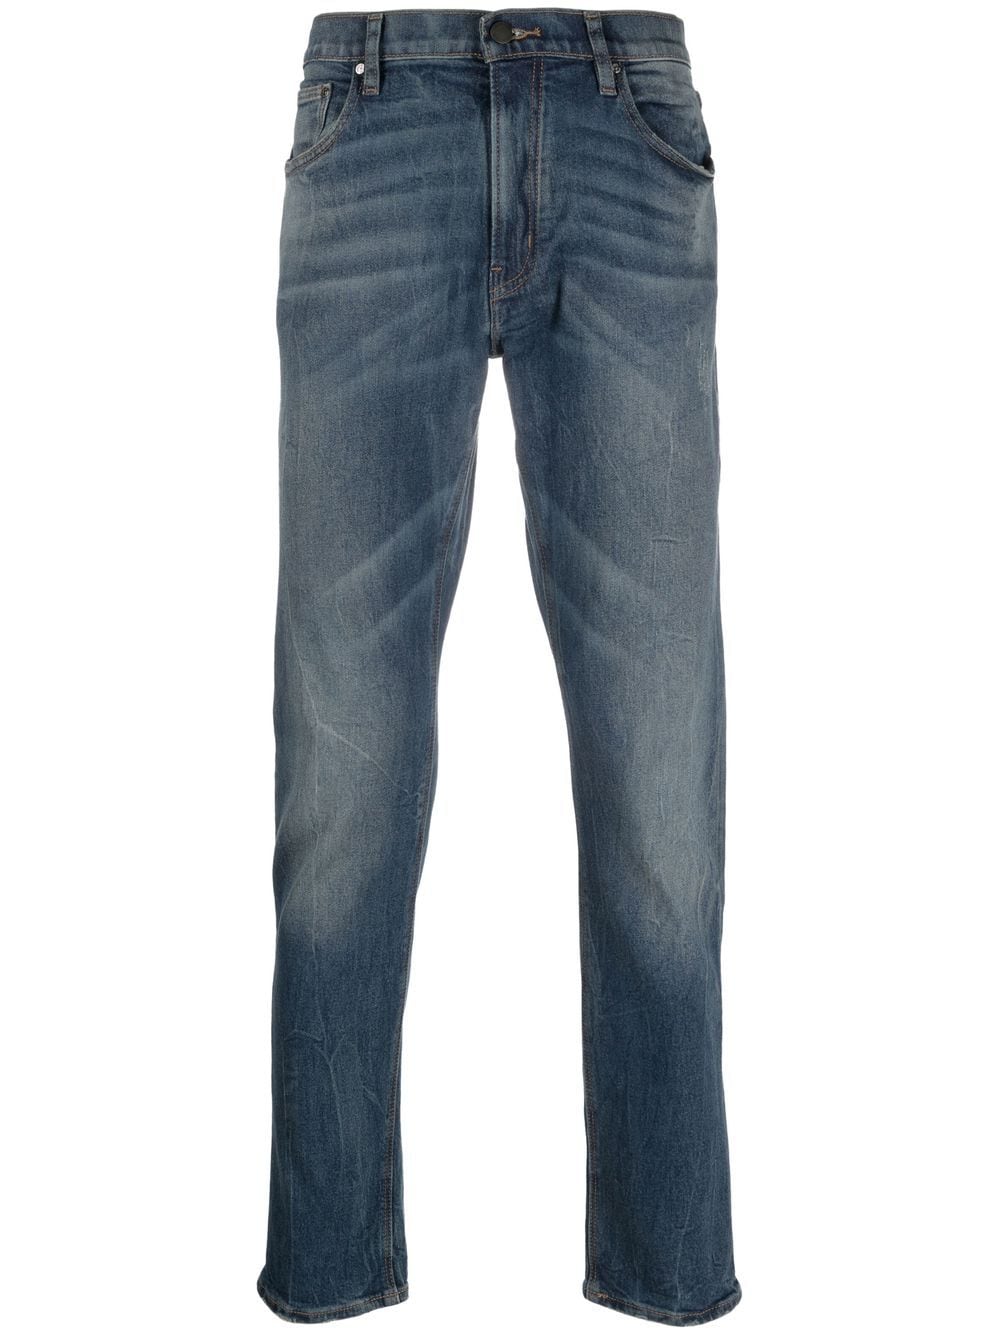 Michael Kors faded-effect skinny jeans - Blue von Michael Kors